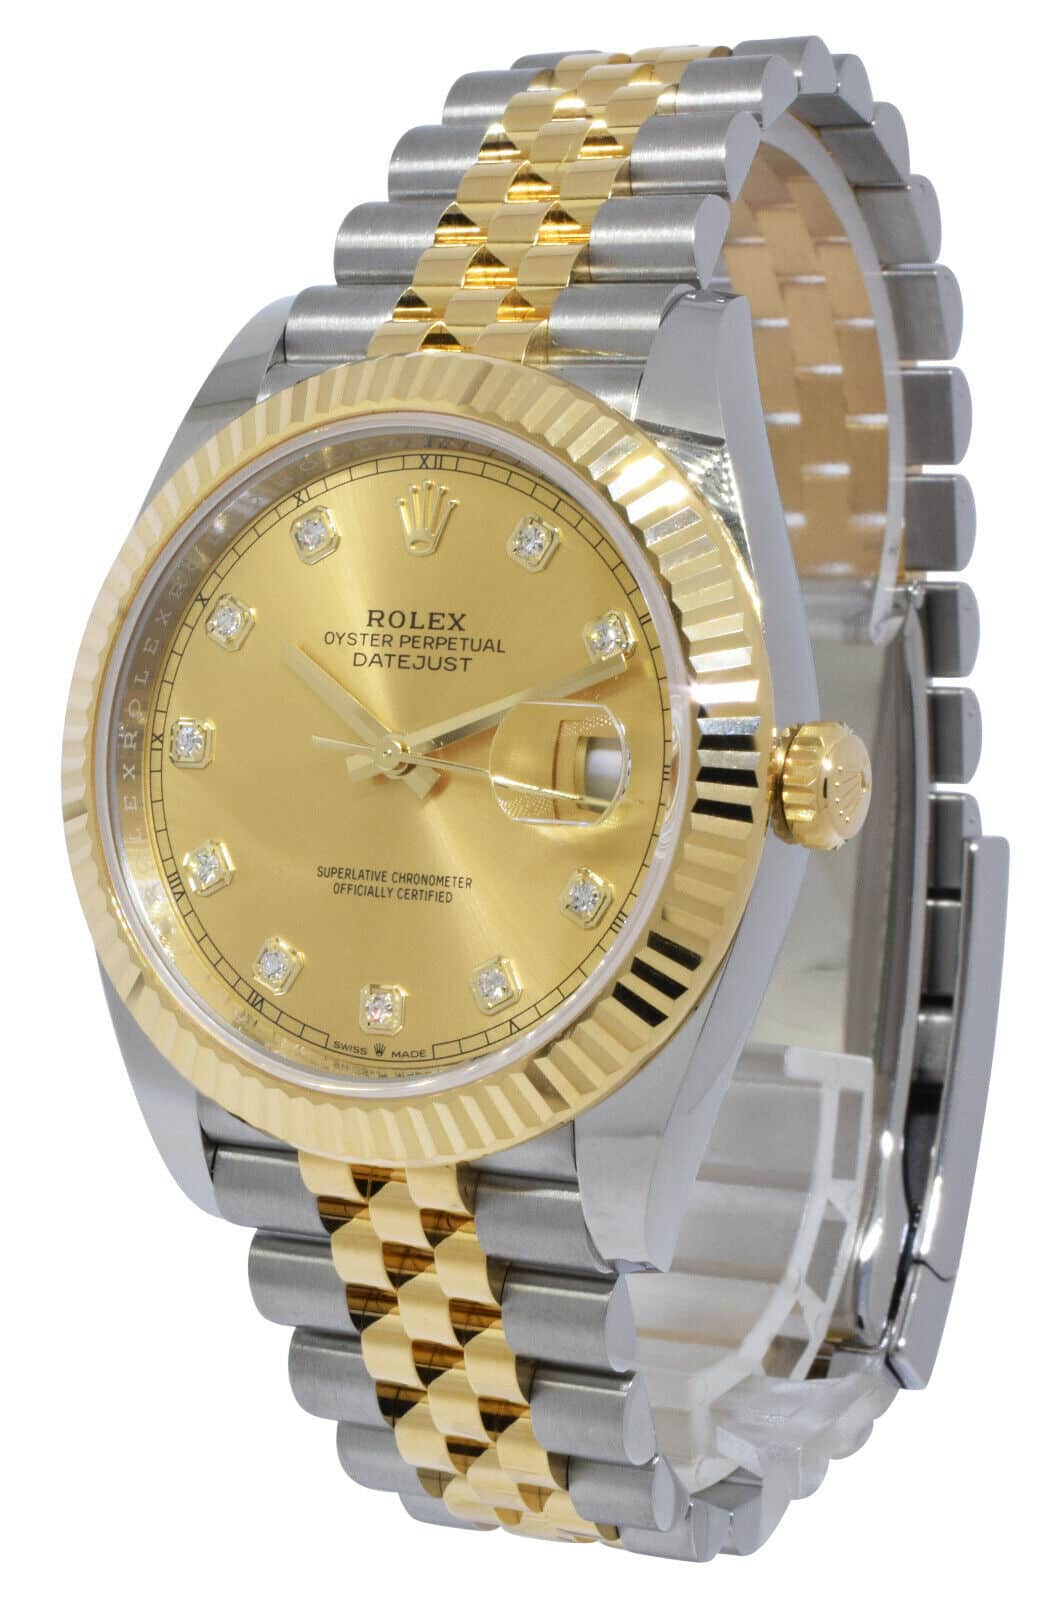 Rolex Datejust 41 18k Yellow Gold/Steel Champagne Diamond Watch B/P '21 126333